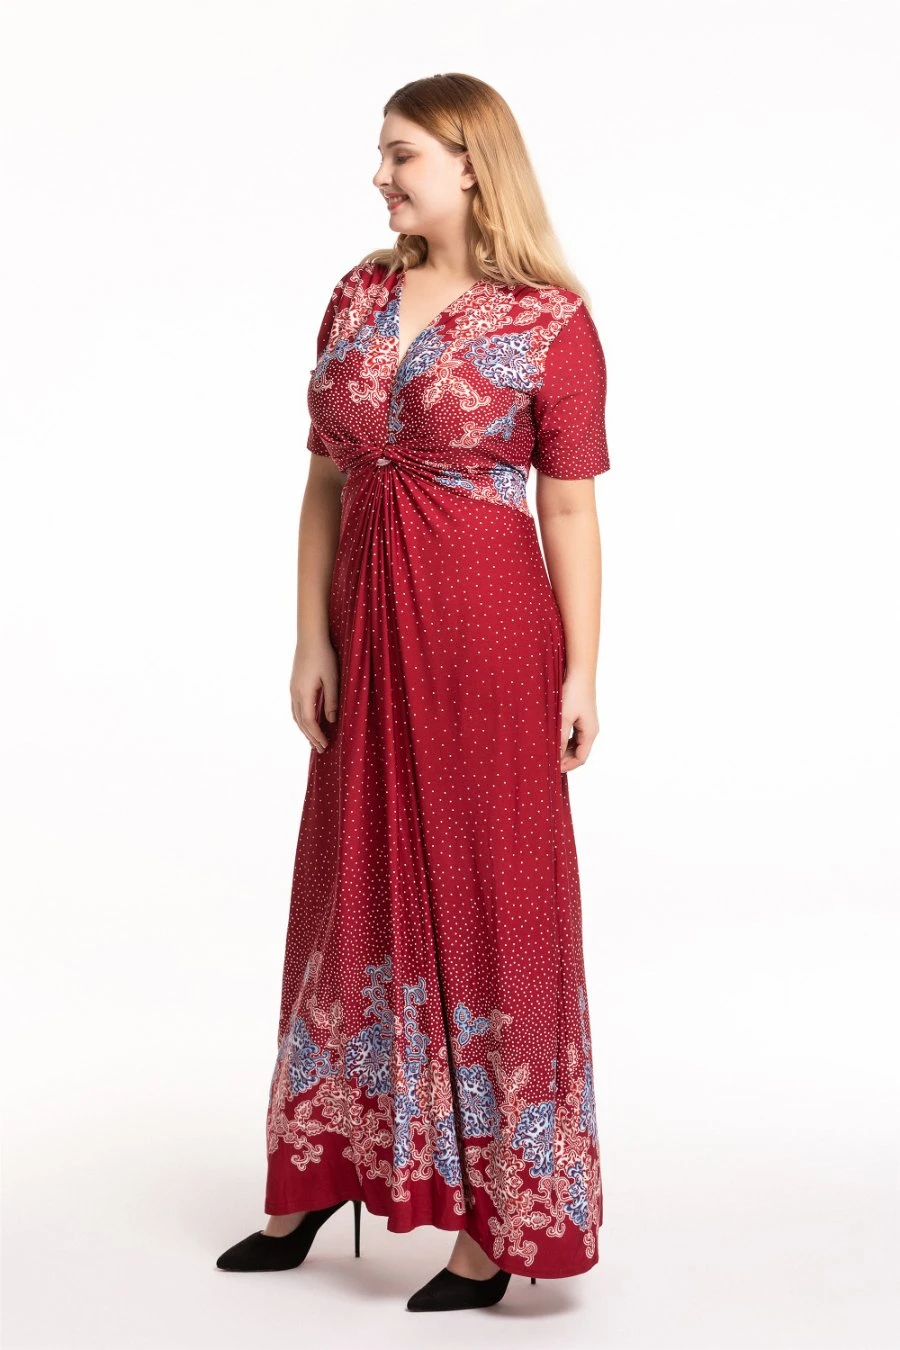 Plus Size Red Short Sleeve Beautiful Clothing Fashion Garment Beach Long Dress